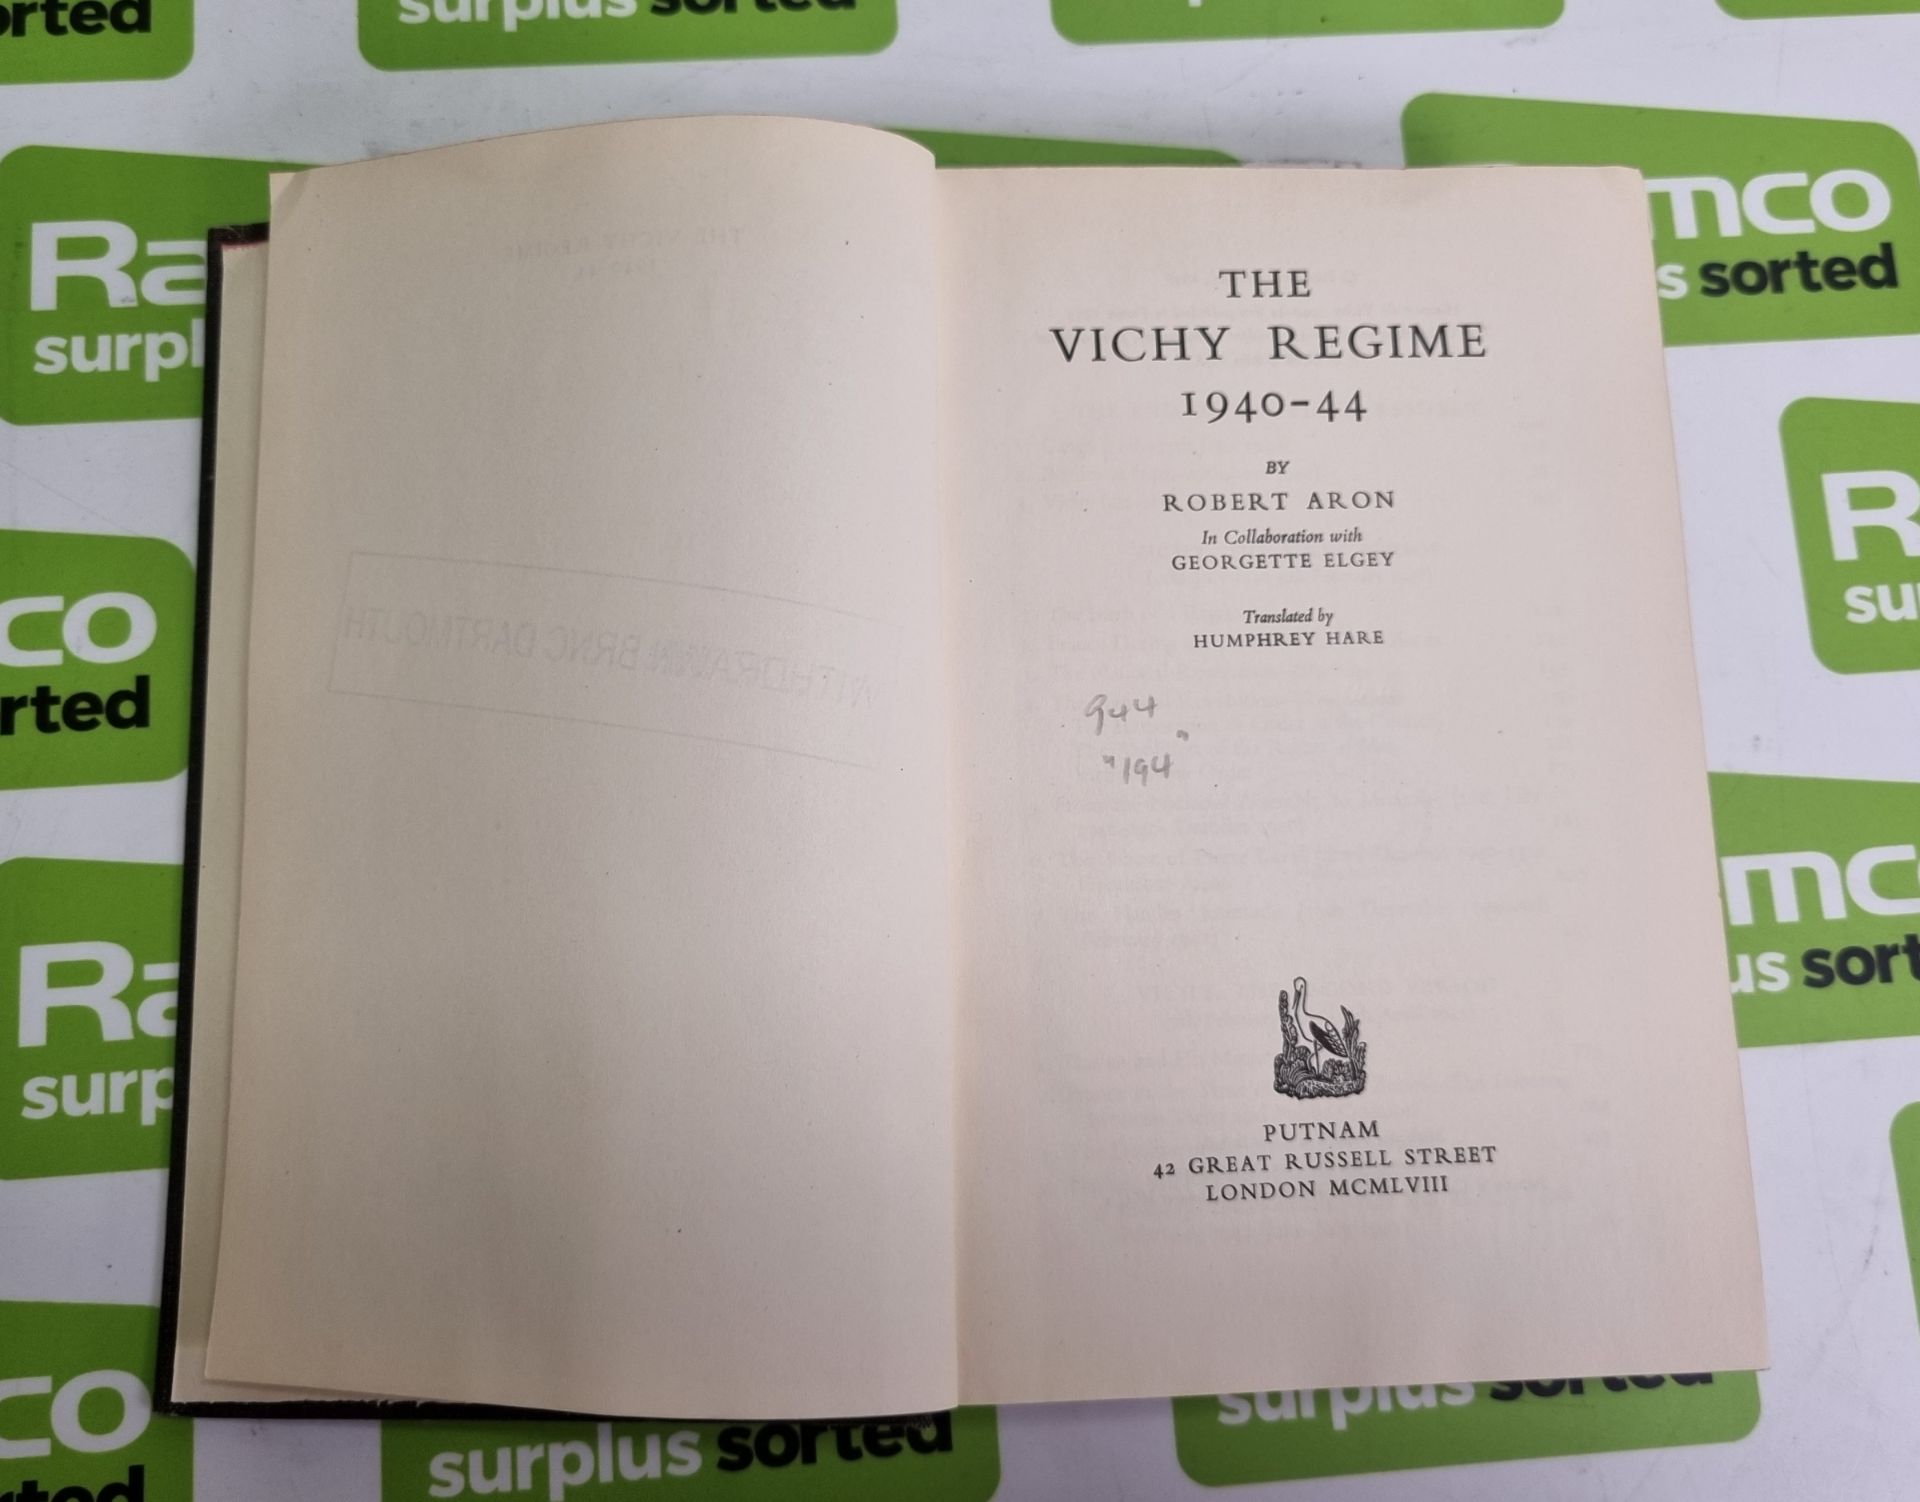 The Vichy Regime 1940-44 : Robert Aron - London 1958, English History 1914-1945 : A J P Taylor - Image 10 of 12